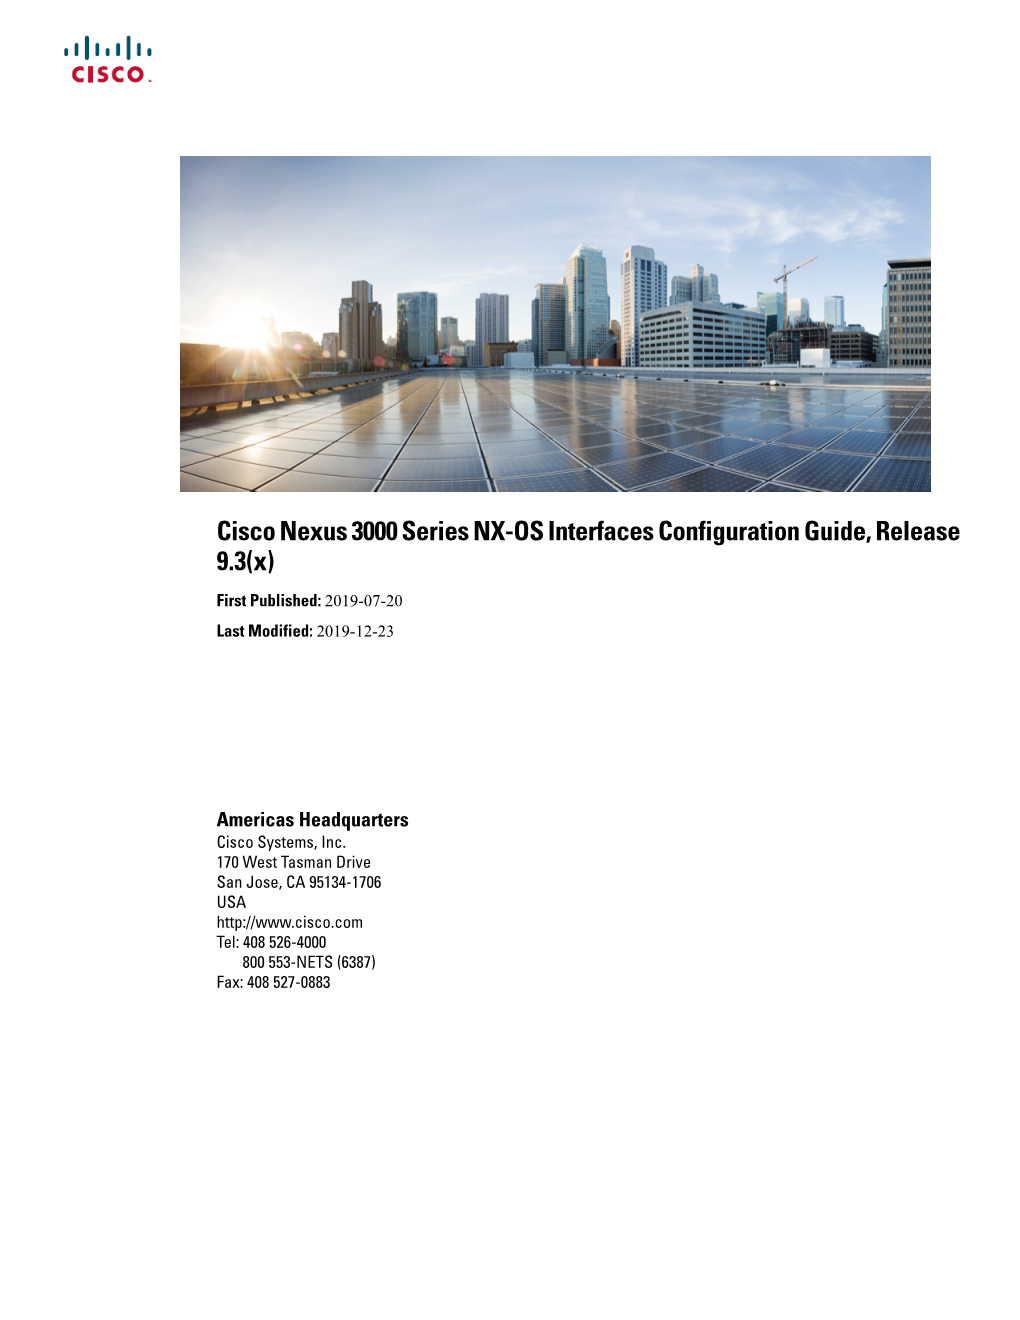 Cisco Nexus 3000 Series NX-OS Interfaces Configuration Guide, Release 9.3(X)